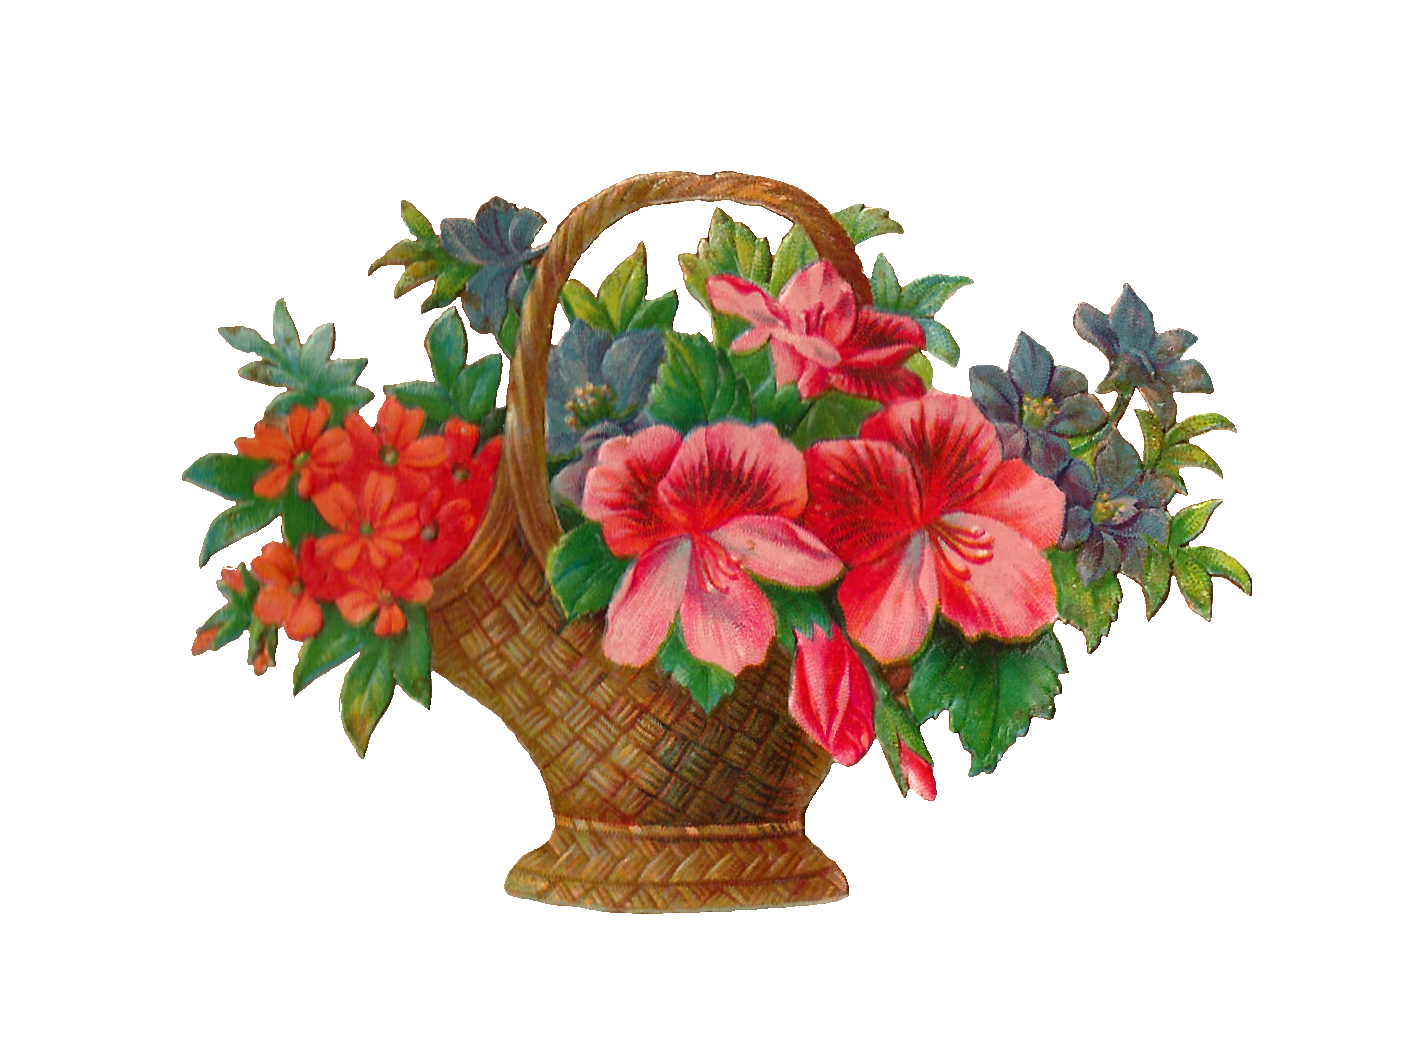 flower basket clipart - photo #48